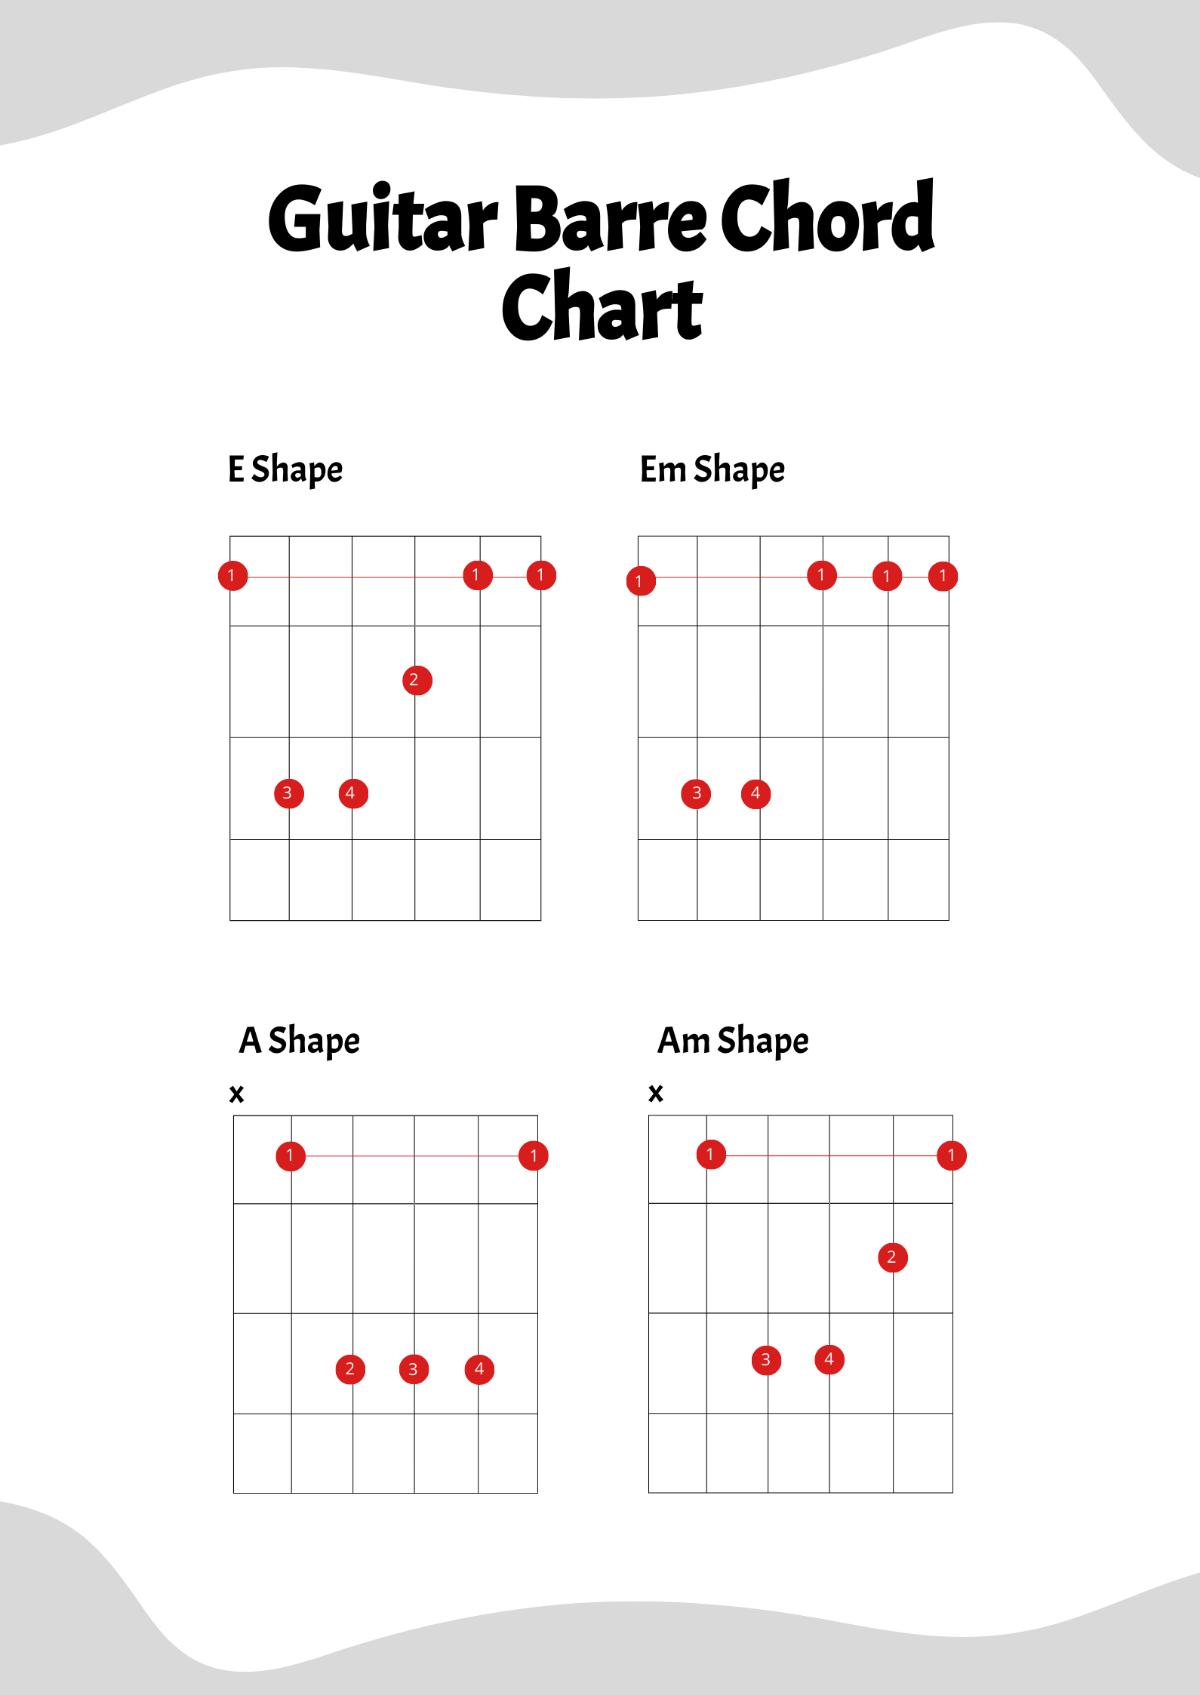 Guitar Barre Chord Chart Template